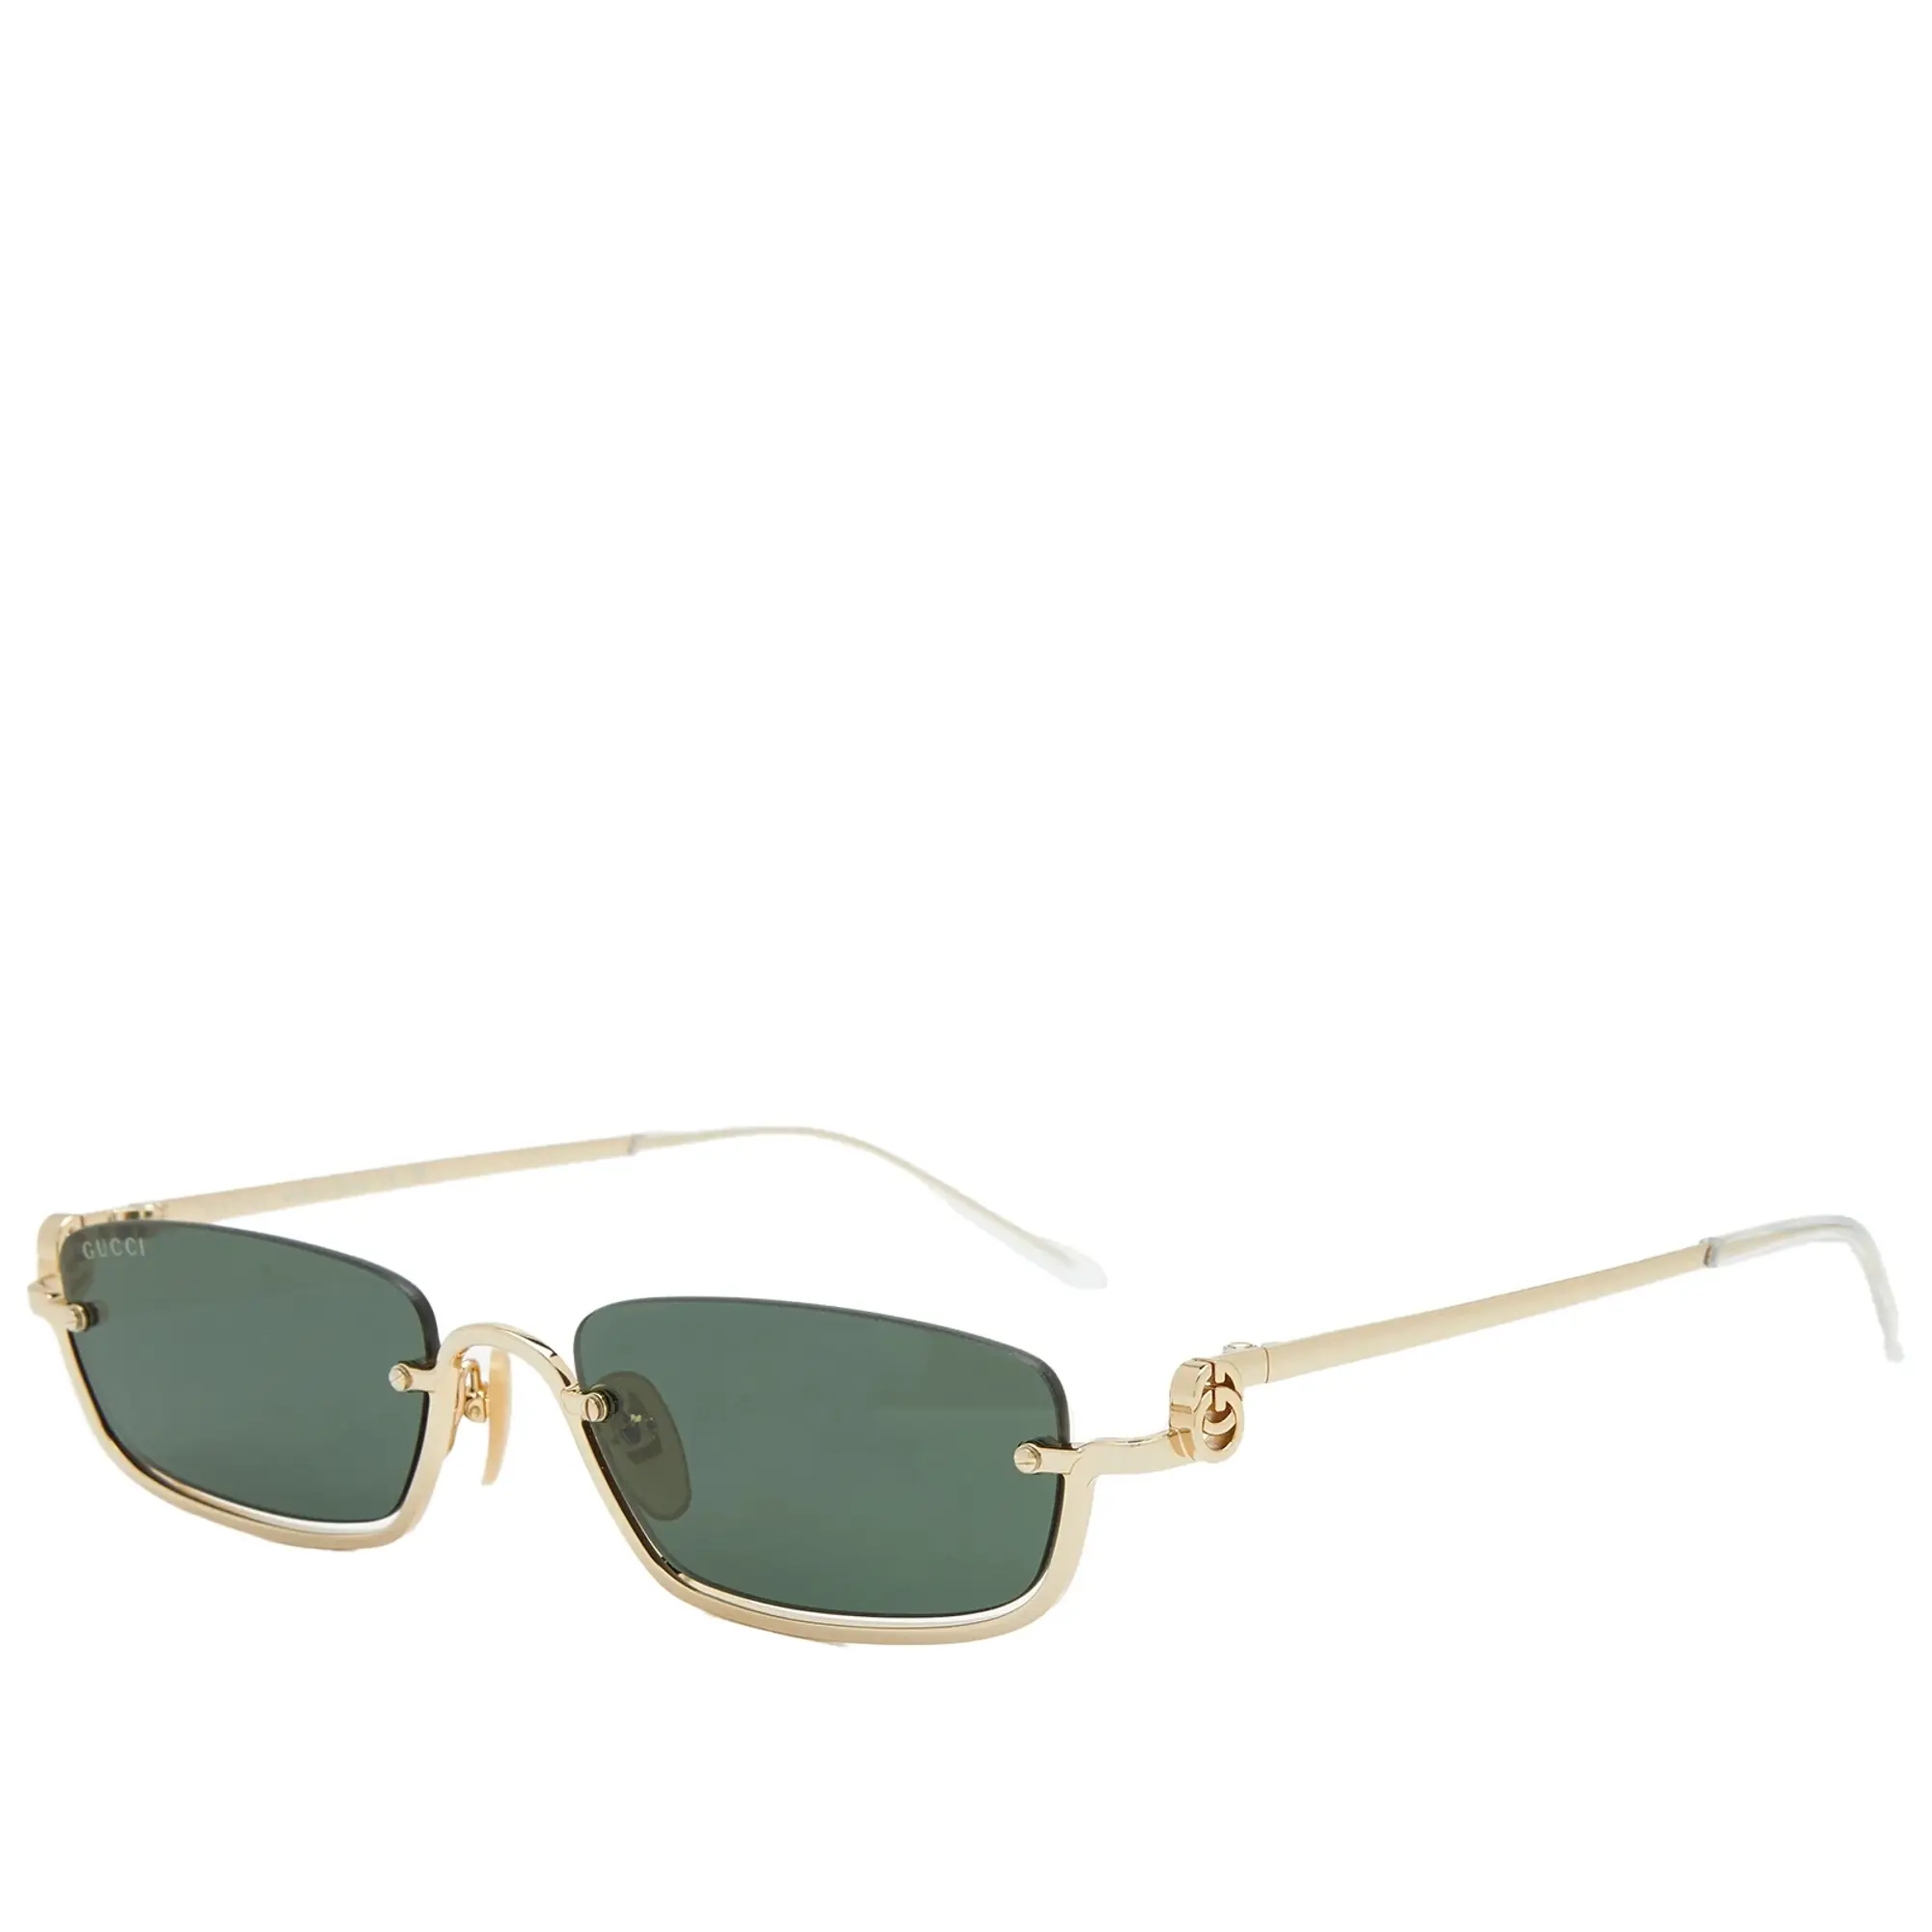 Gucci Men's Eyewear GG1278S Sunglasses Gold/Green